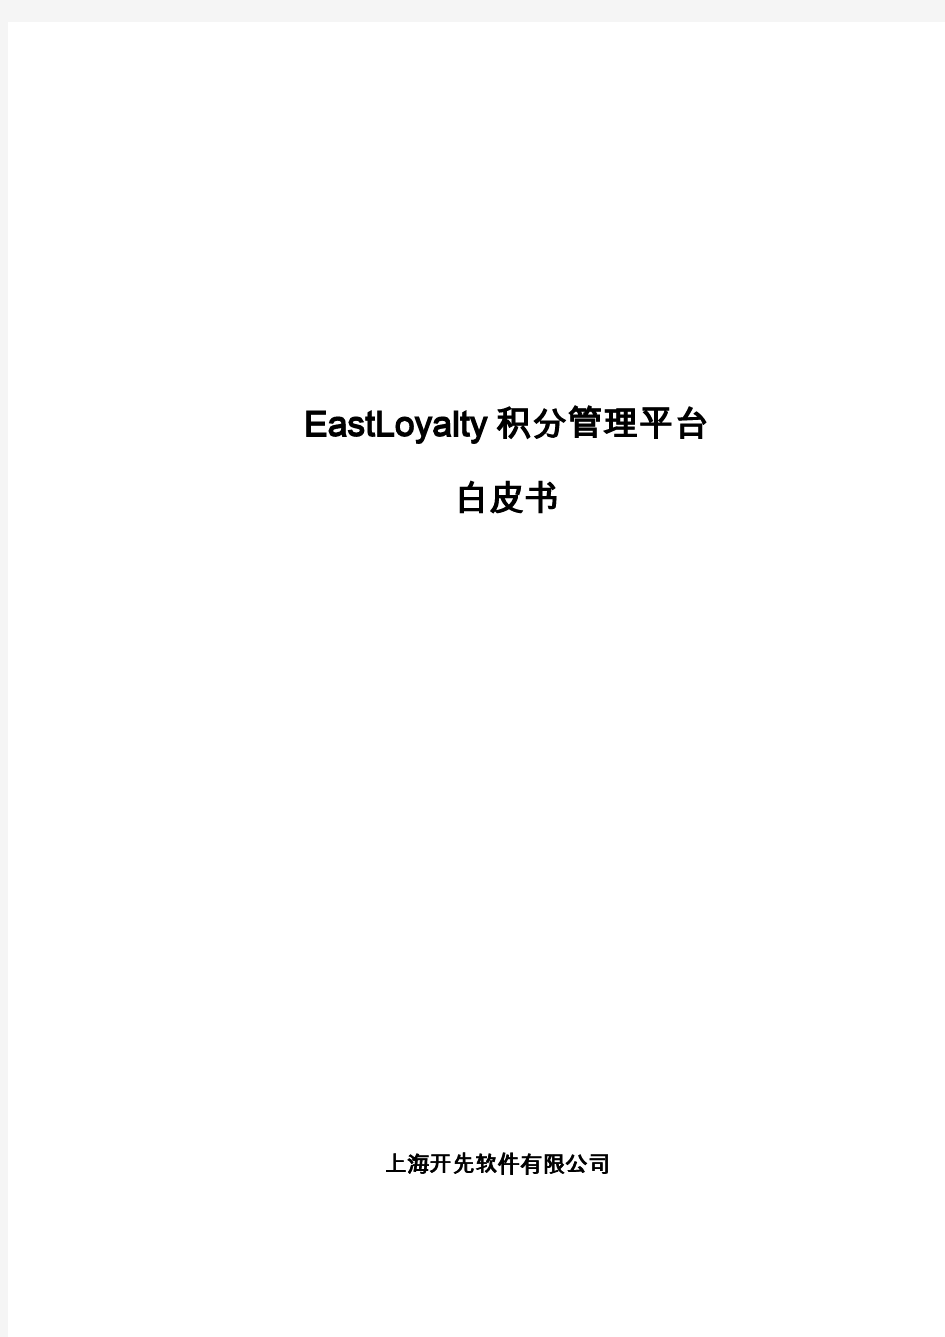 EastLoyalty积分管理平台白皮书